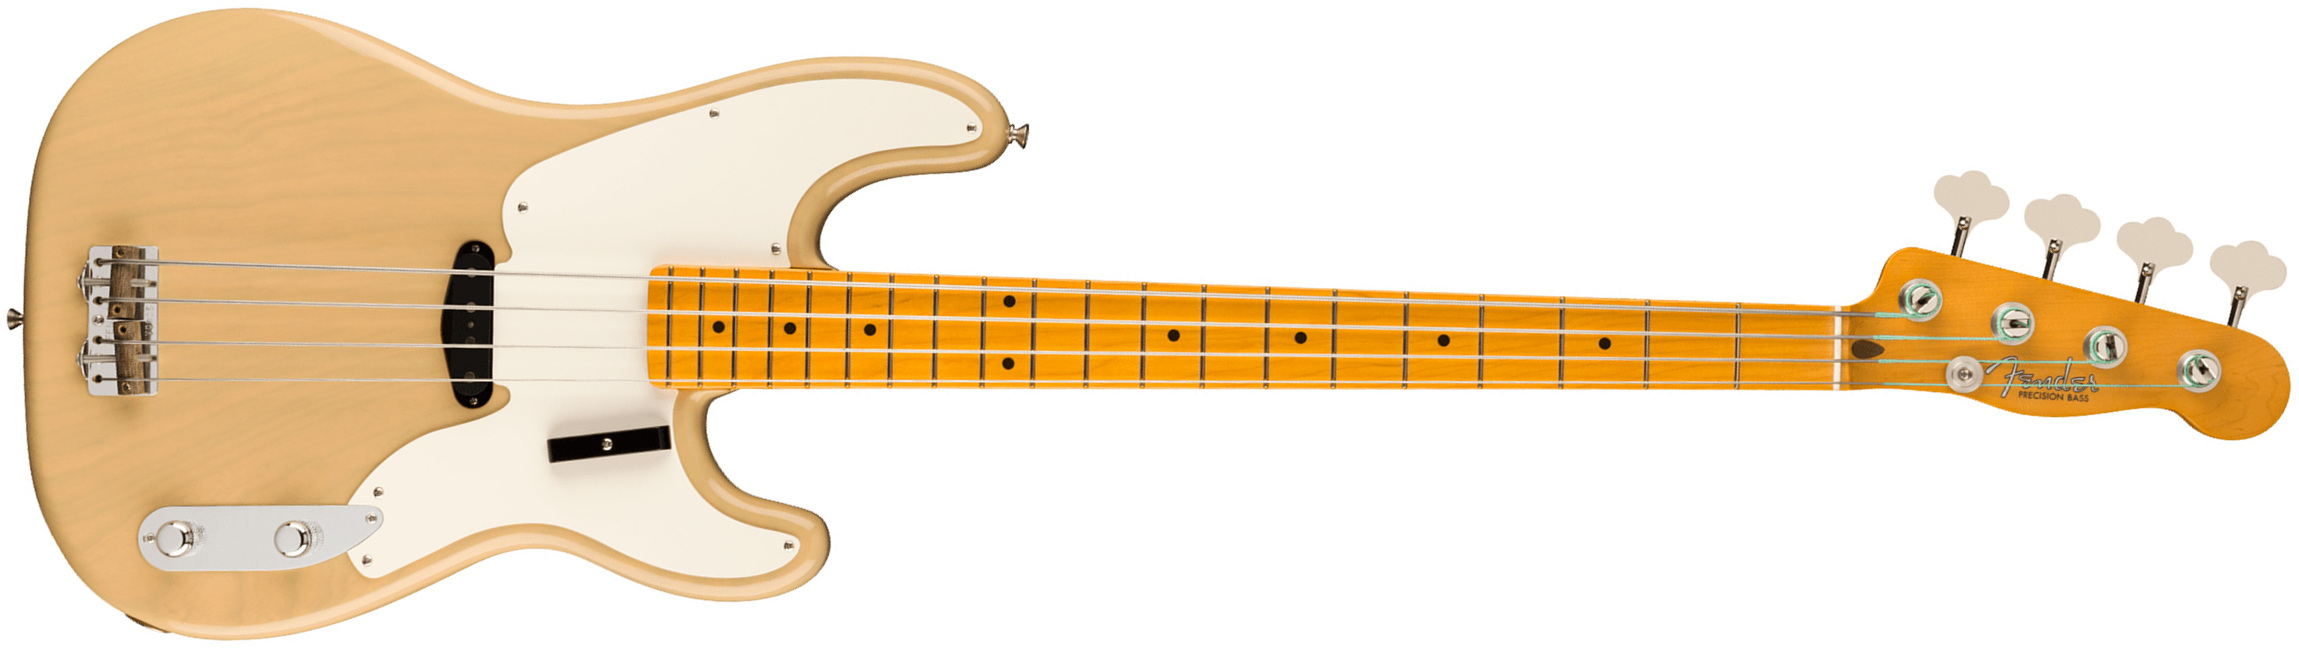 Fender Precision Bass 1954 American Vintage Ii Usa Mn - Vintage Blonde - Basse Électrique Solid Body - Main picture